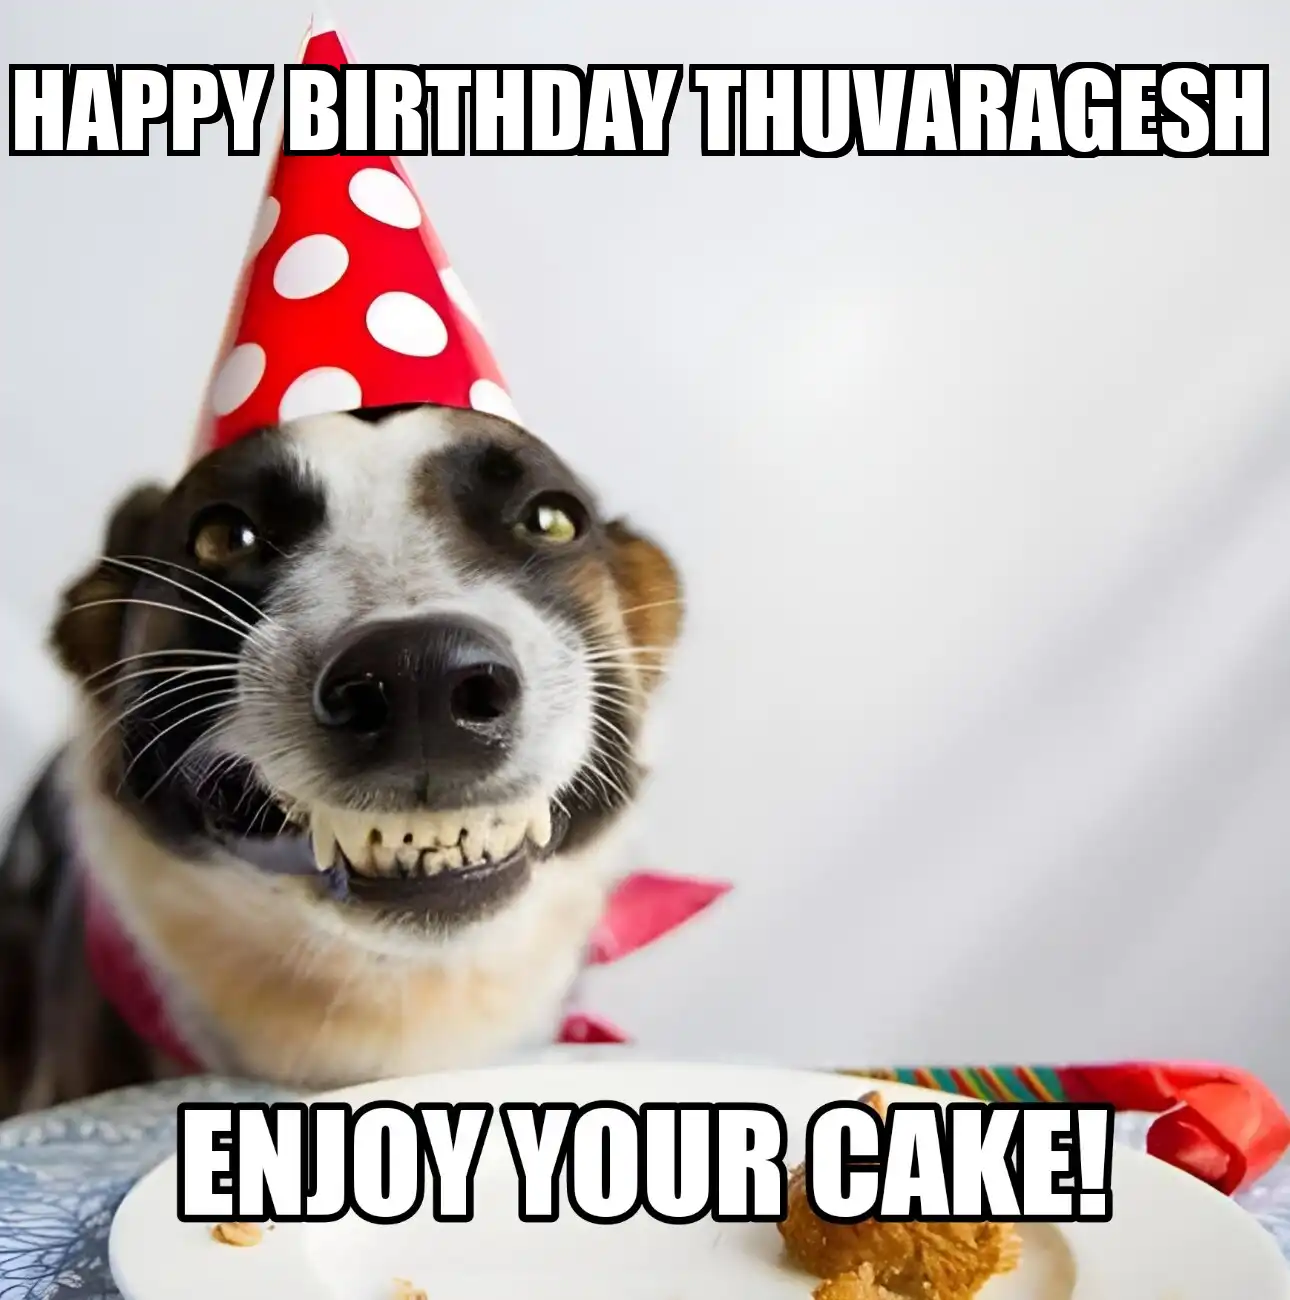 Happy Birthday Thuvaragesh Enjoy Your Cake Dog Meme